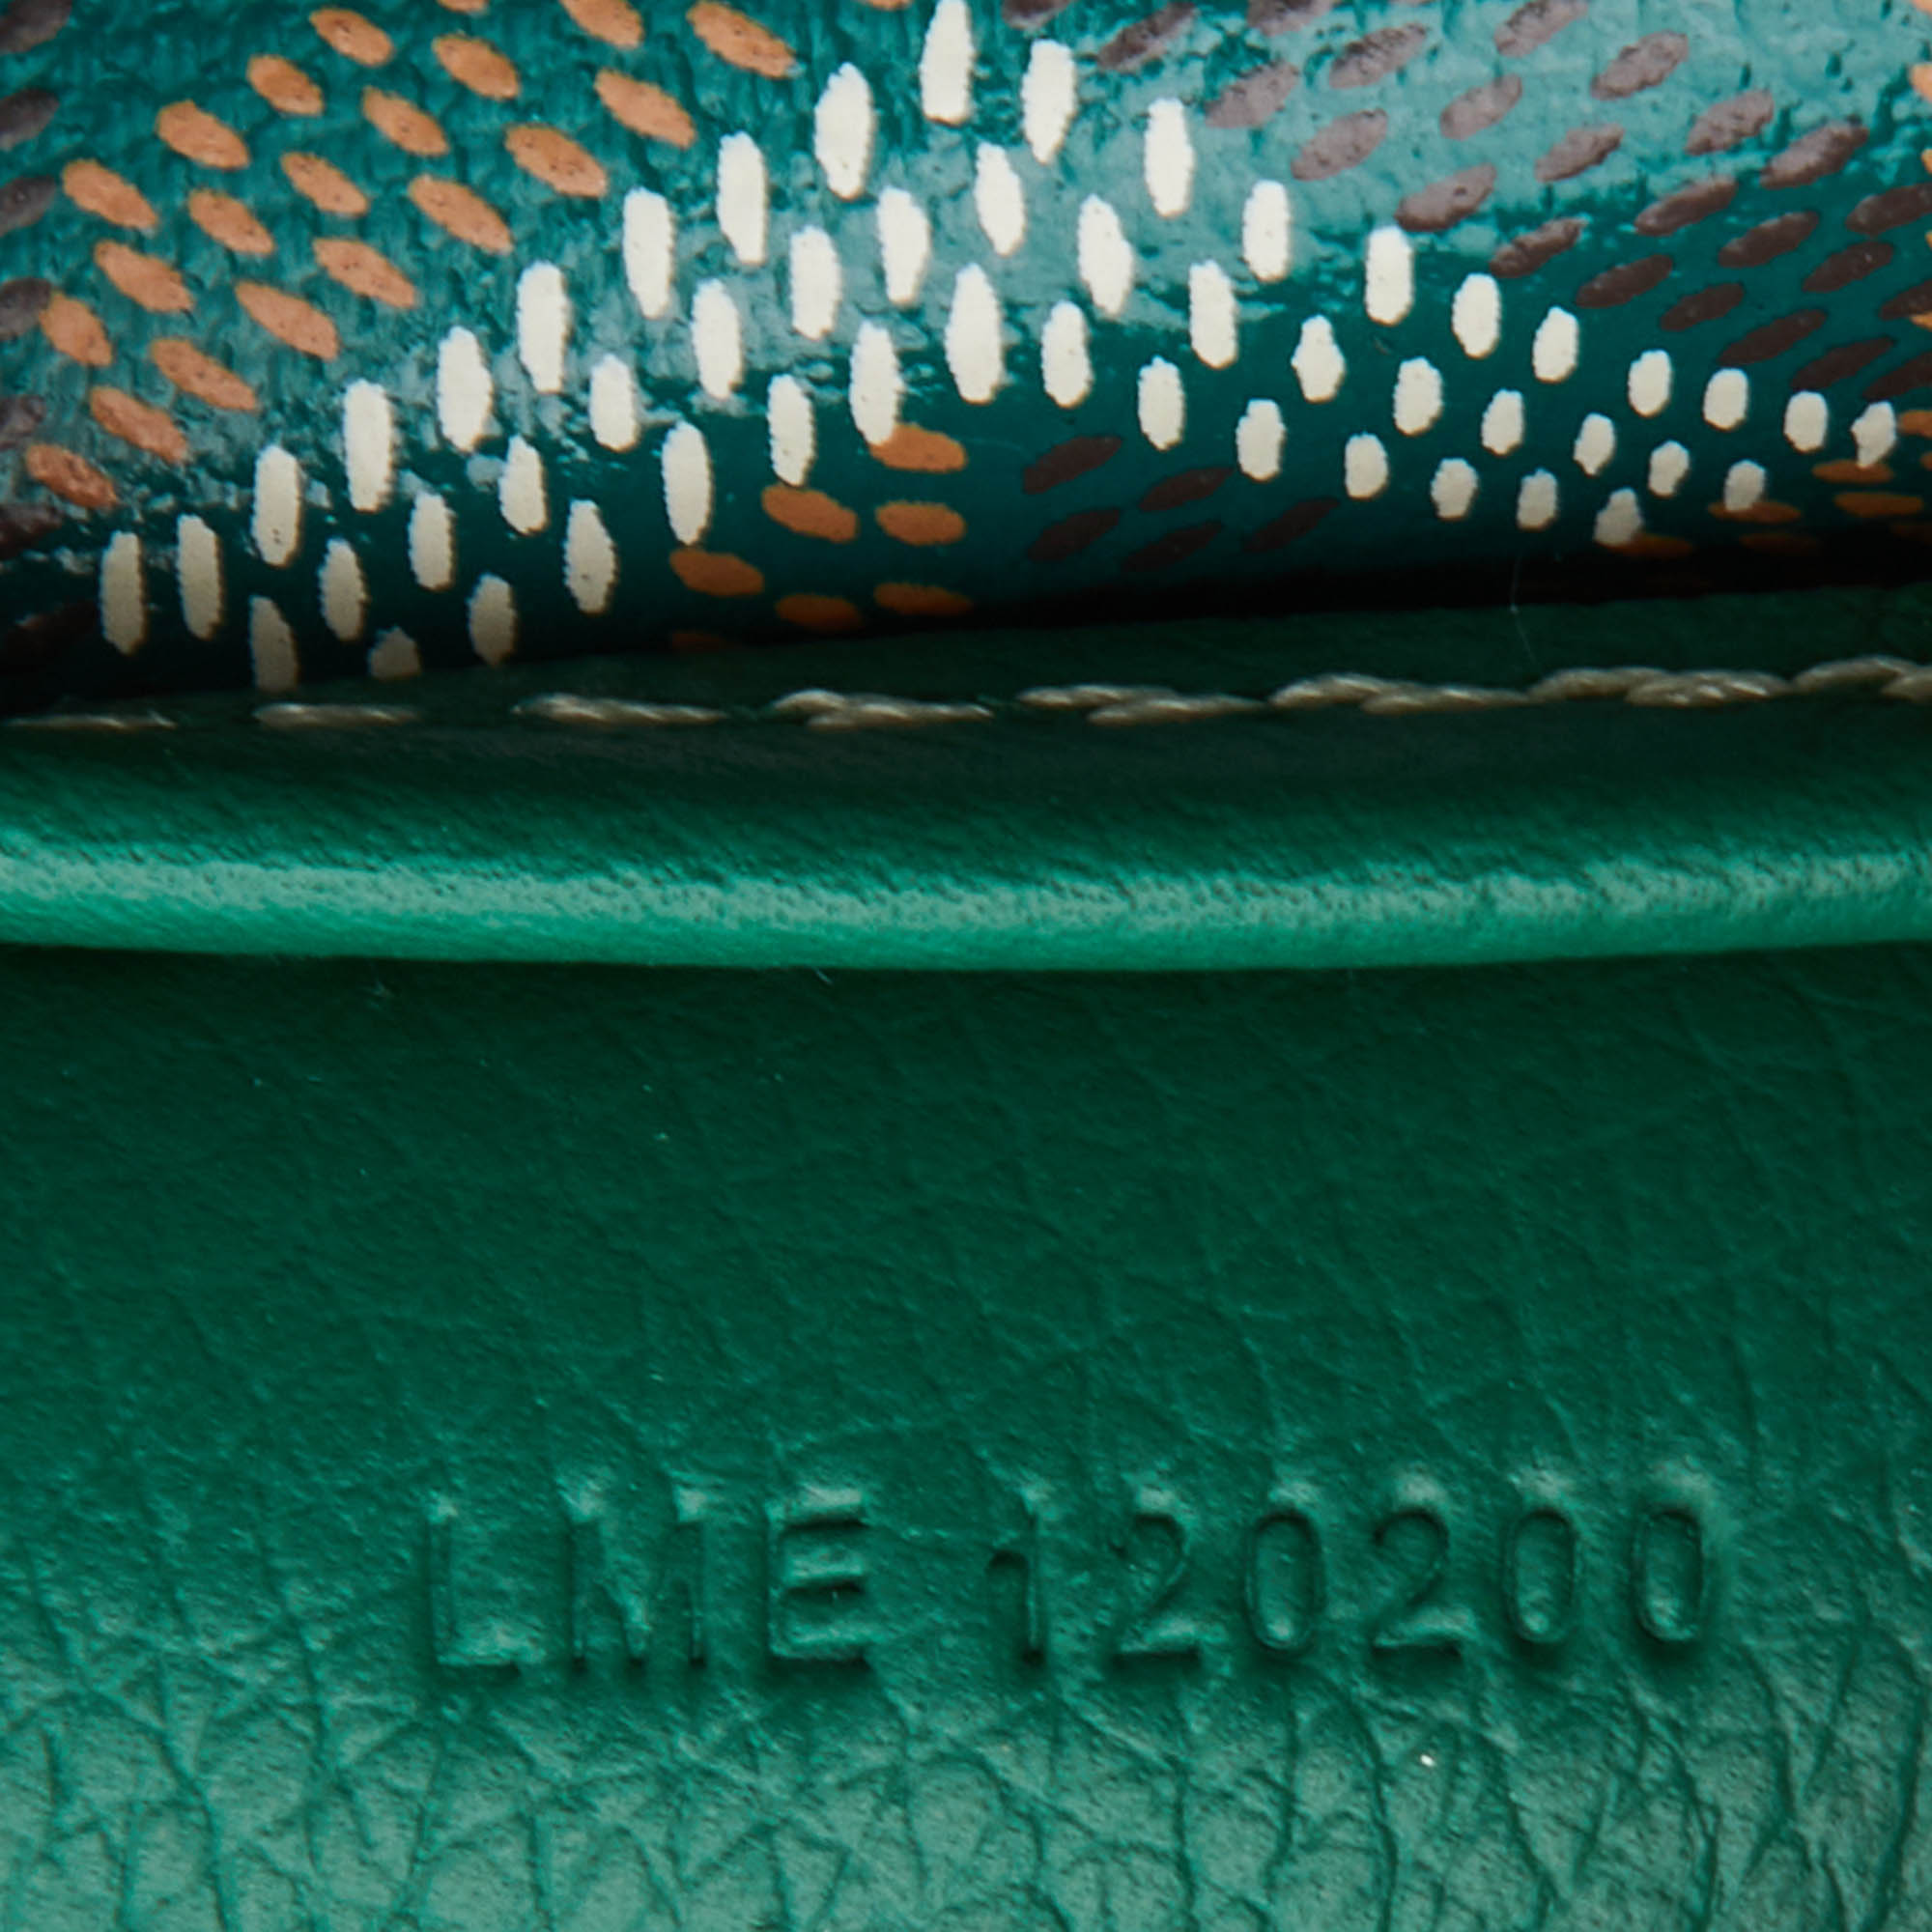 Leather bag Goyard Green in Leather - 31740042